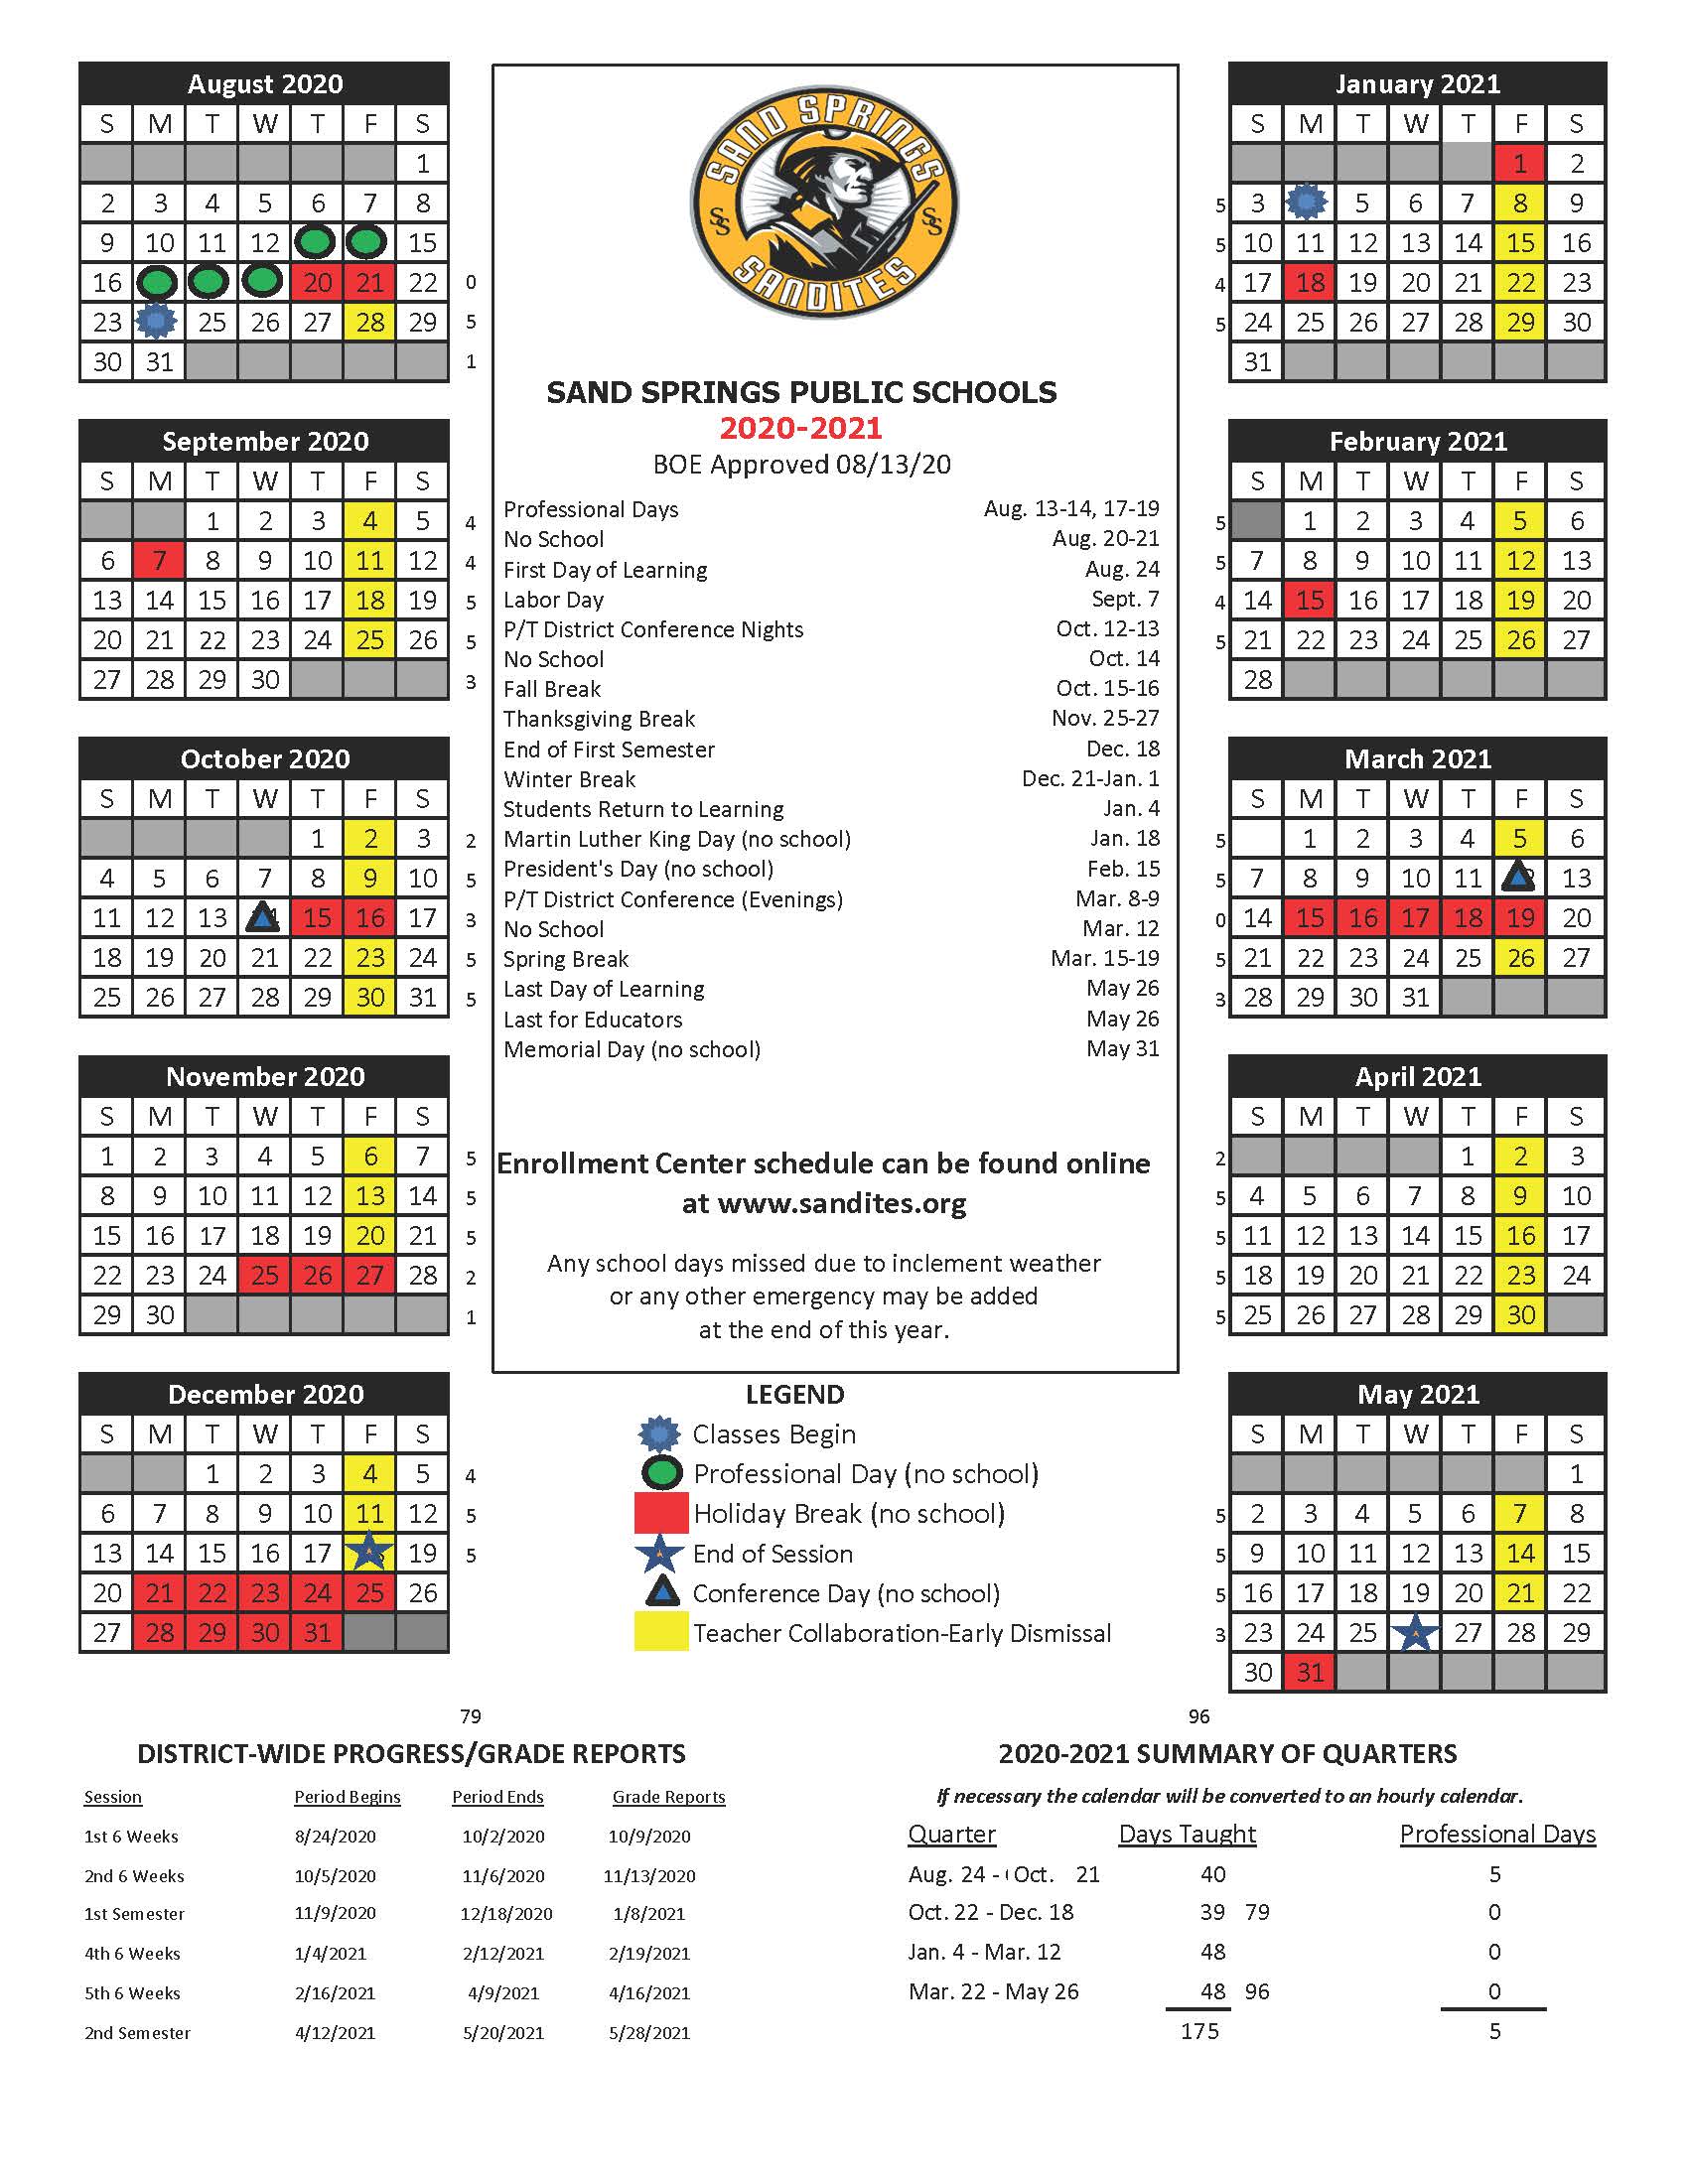 approved-school-calendars-sand-springs-public-schools